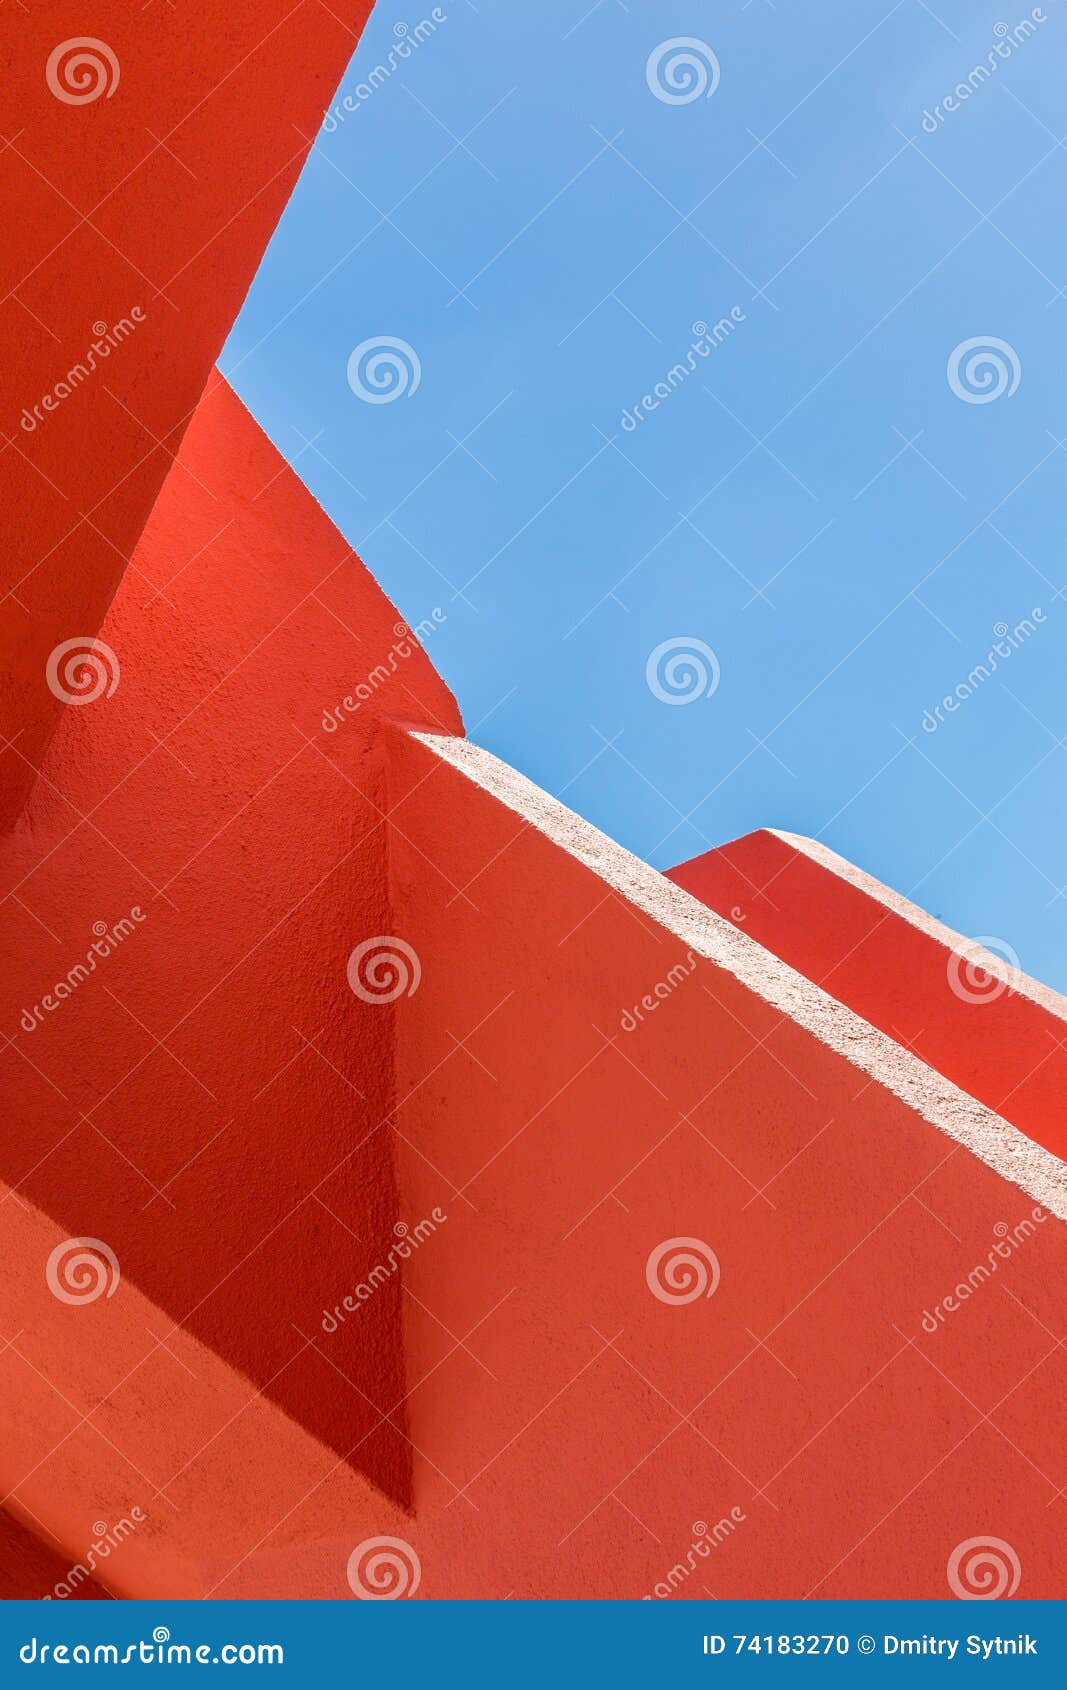 abstract geometry of orange rugger bending